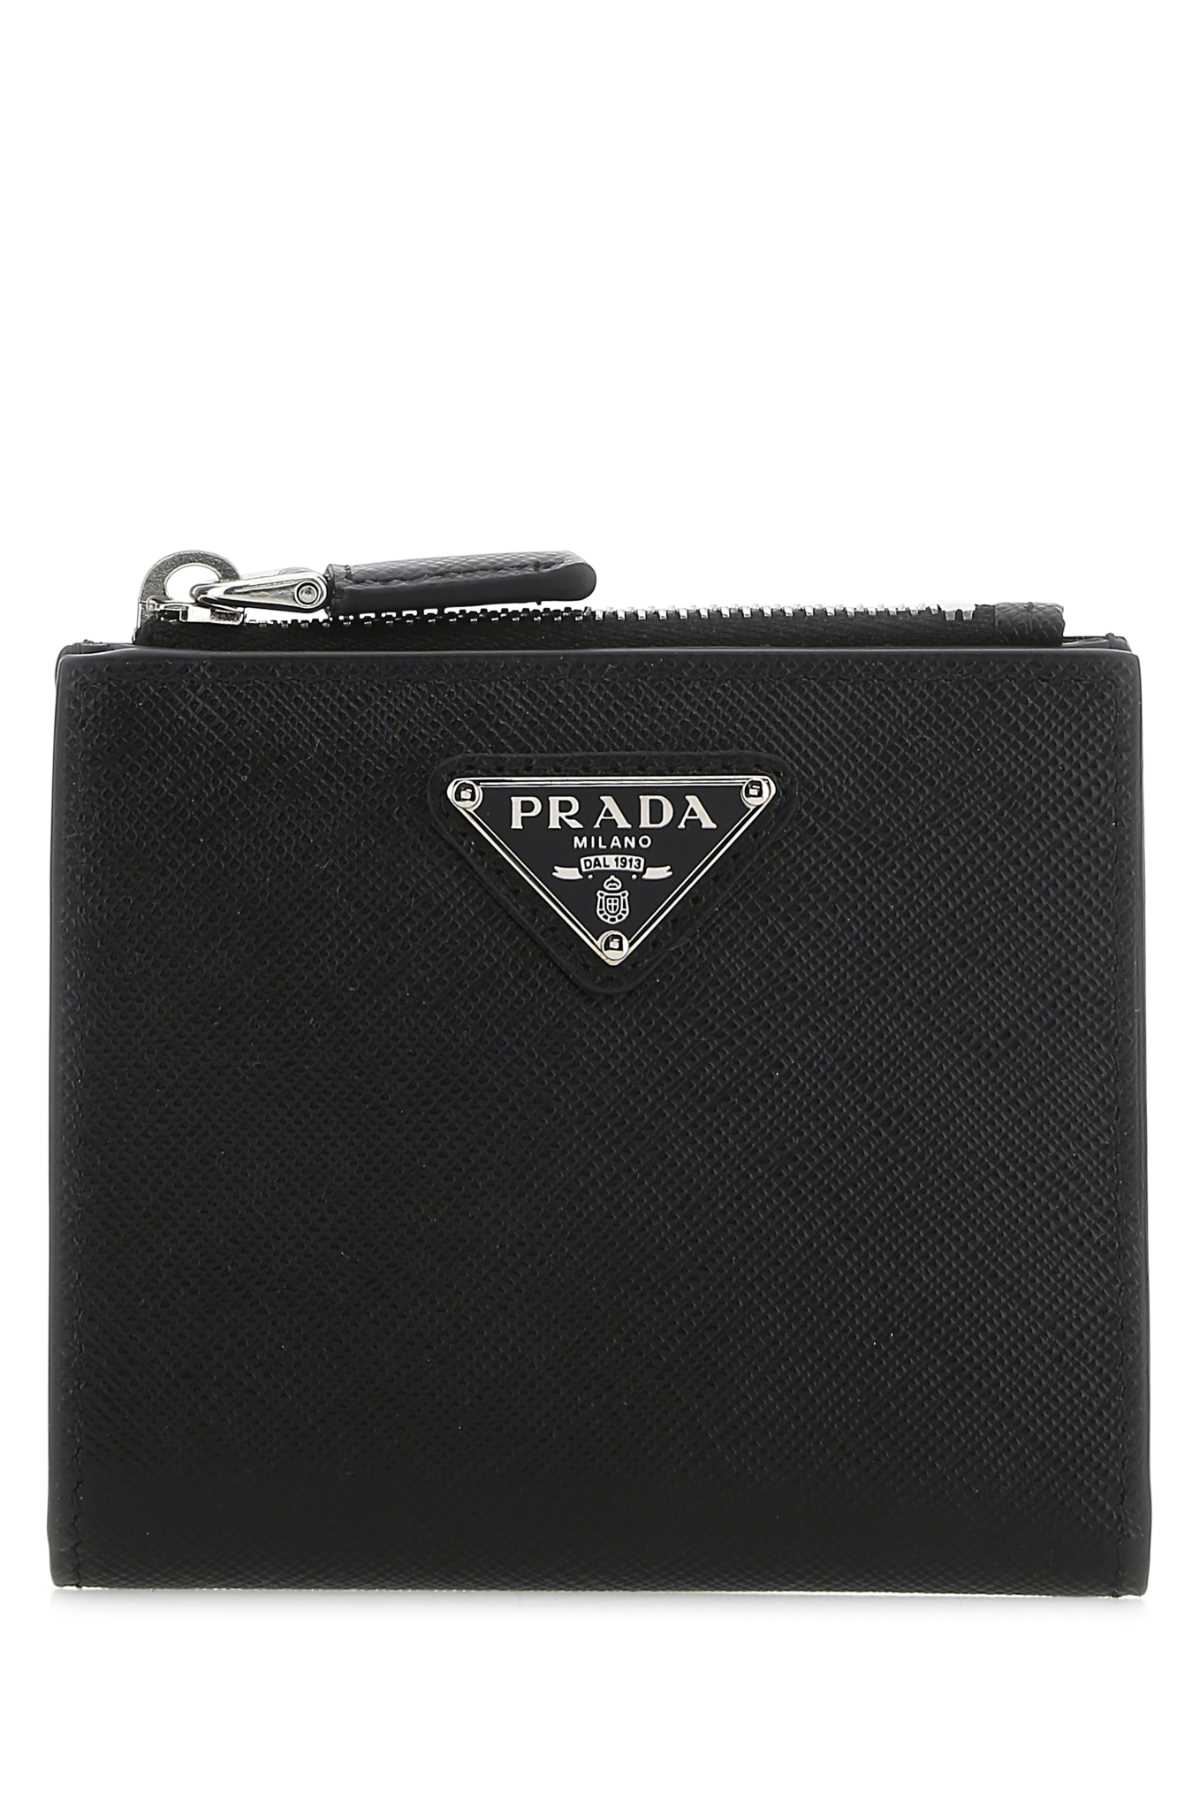 Prada Black Leather Wallet In F0002